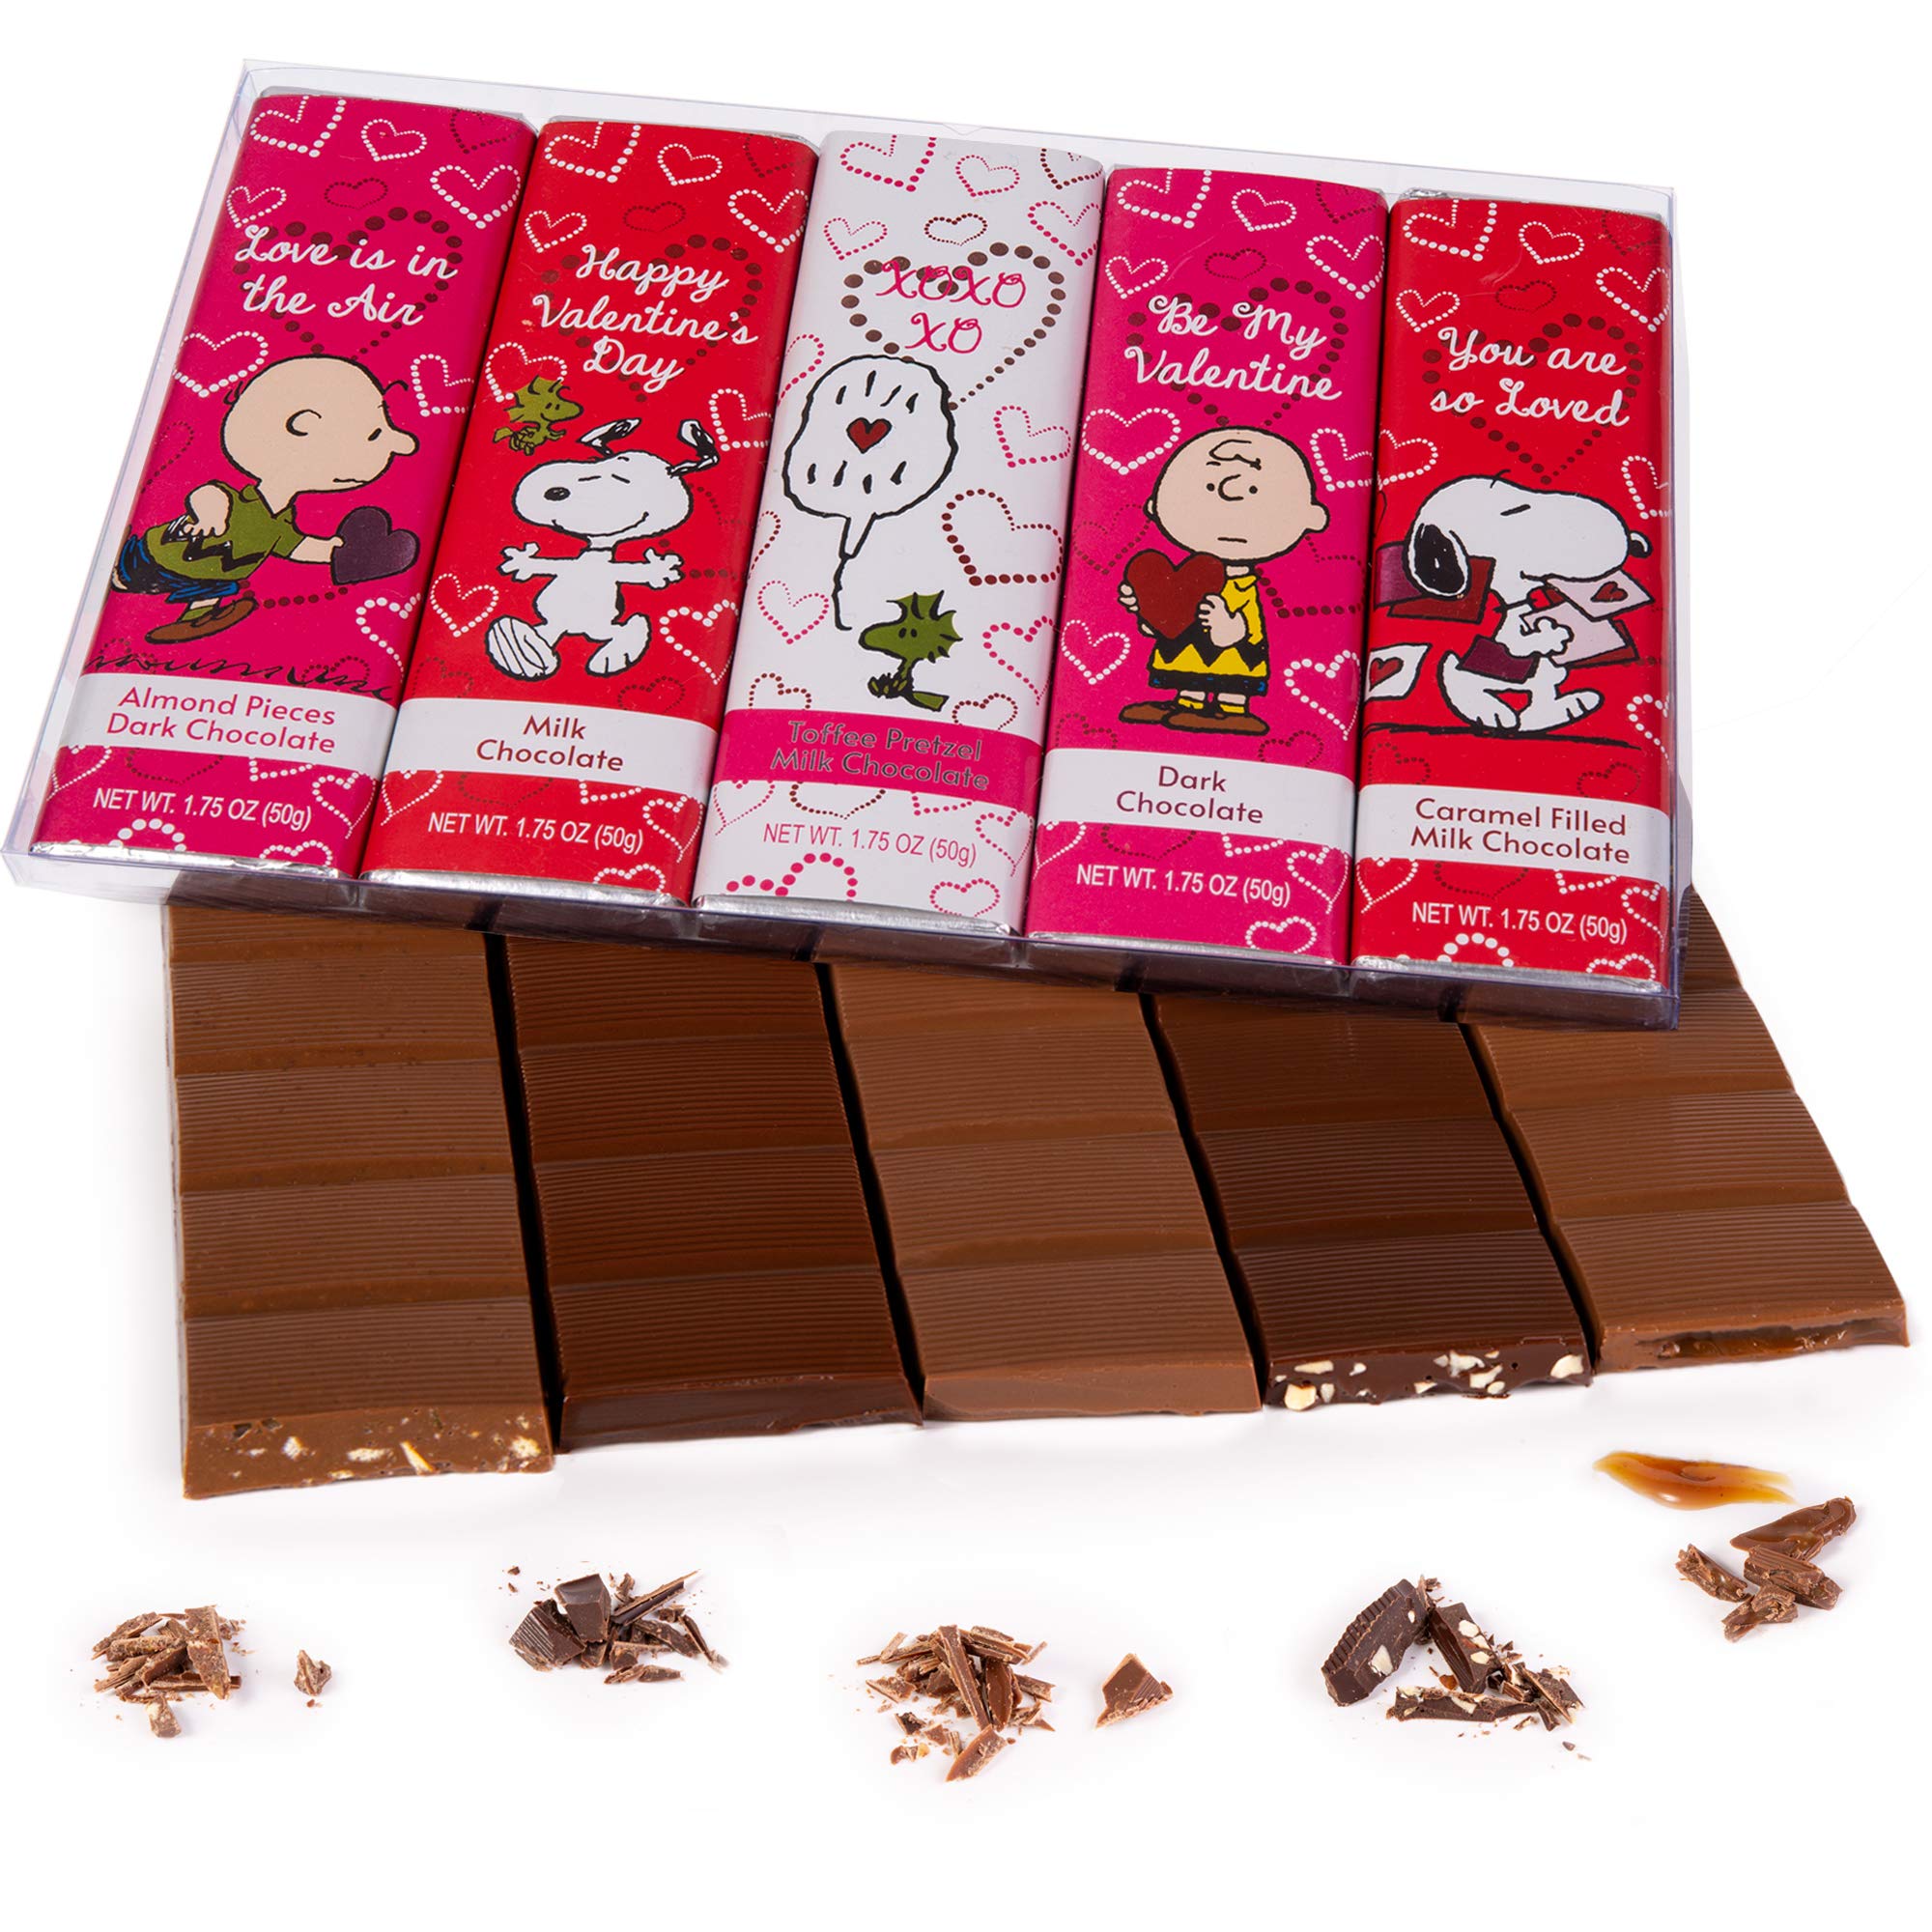 Peanuts Chocolate Variety Pack